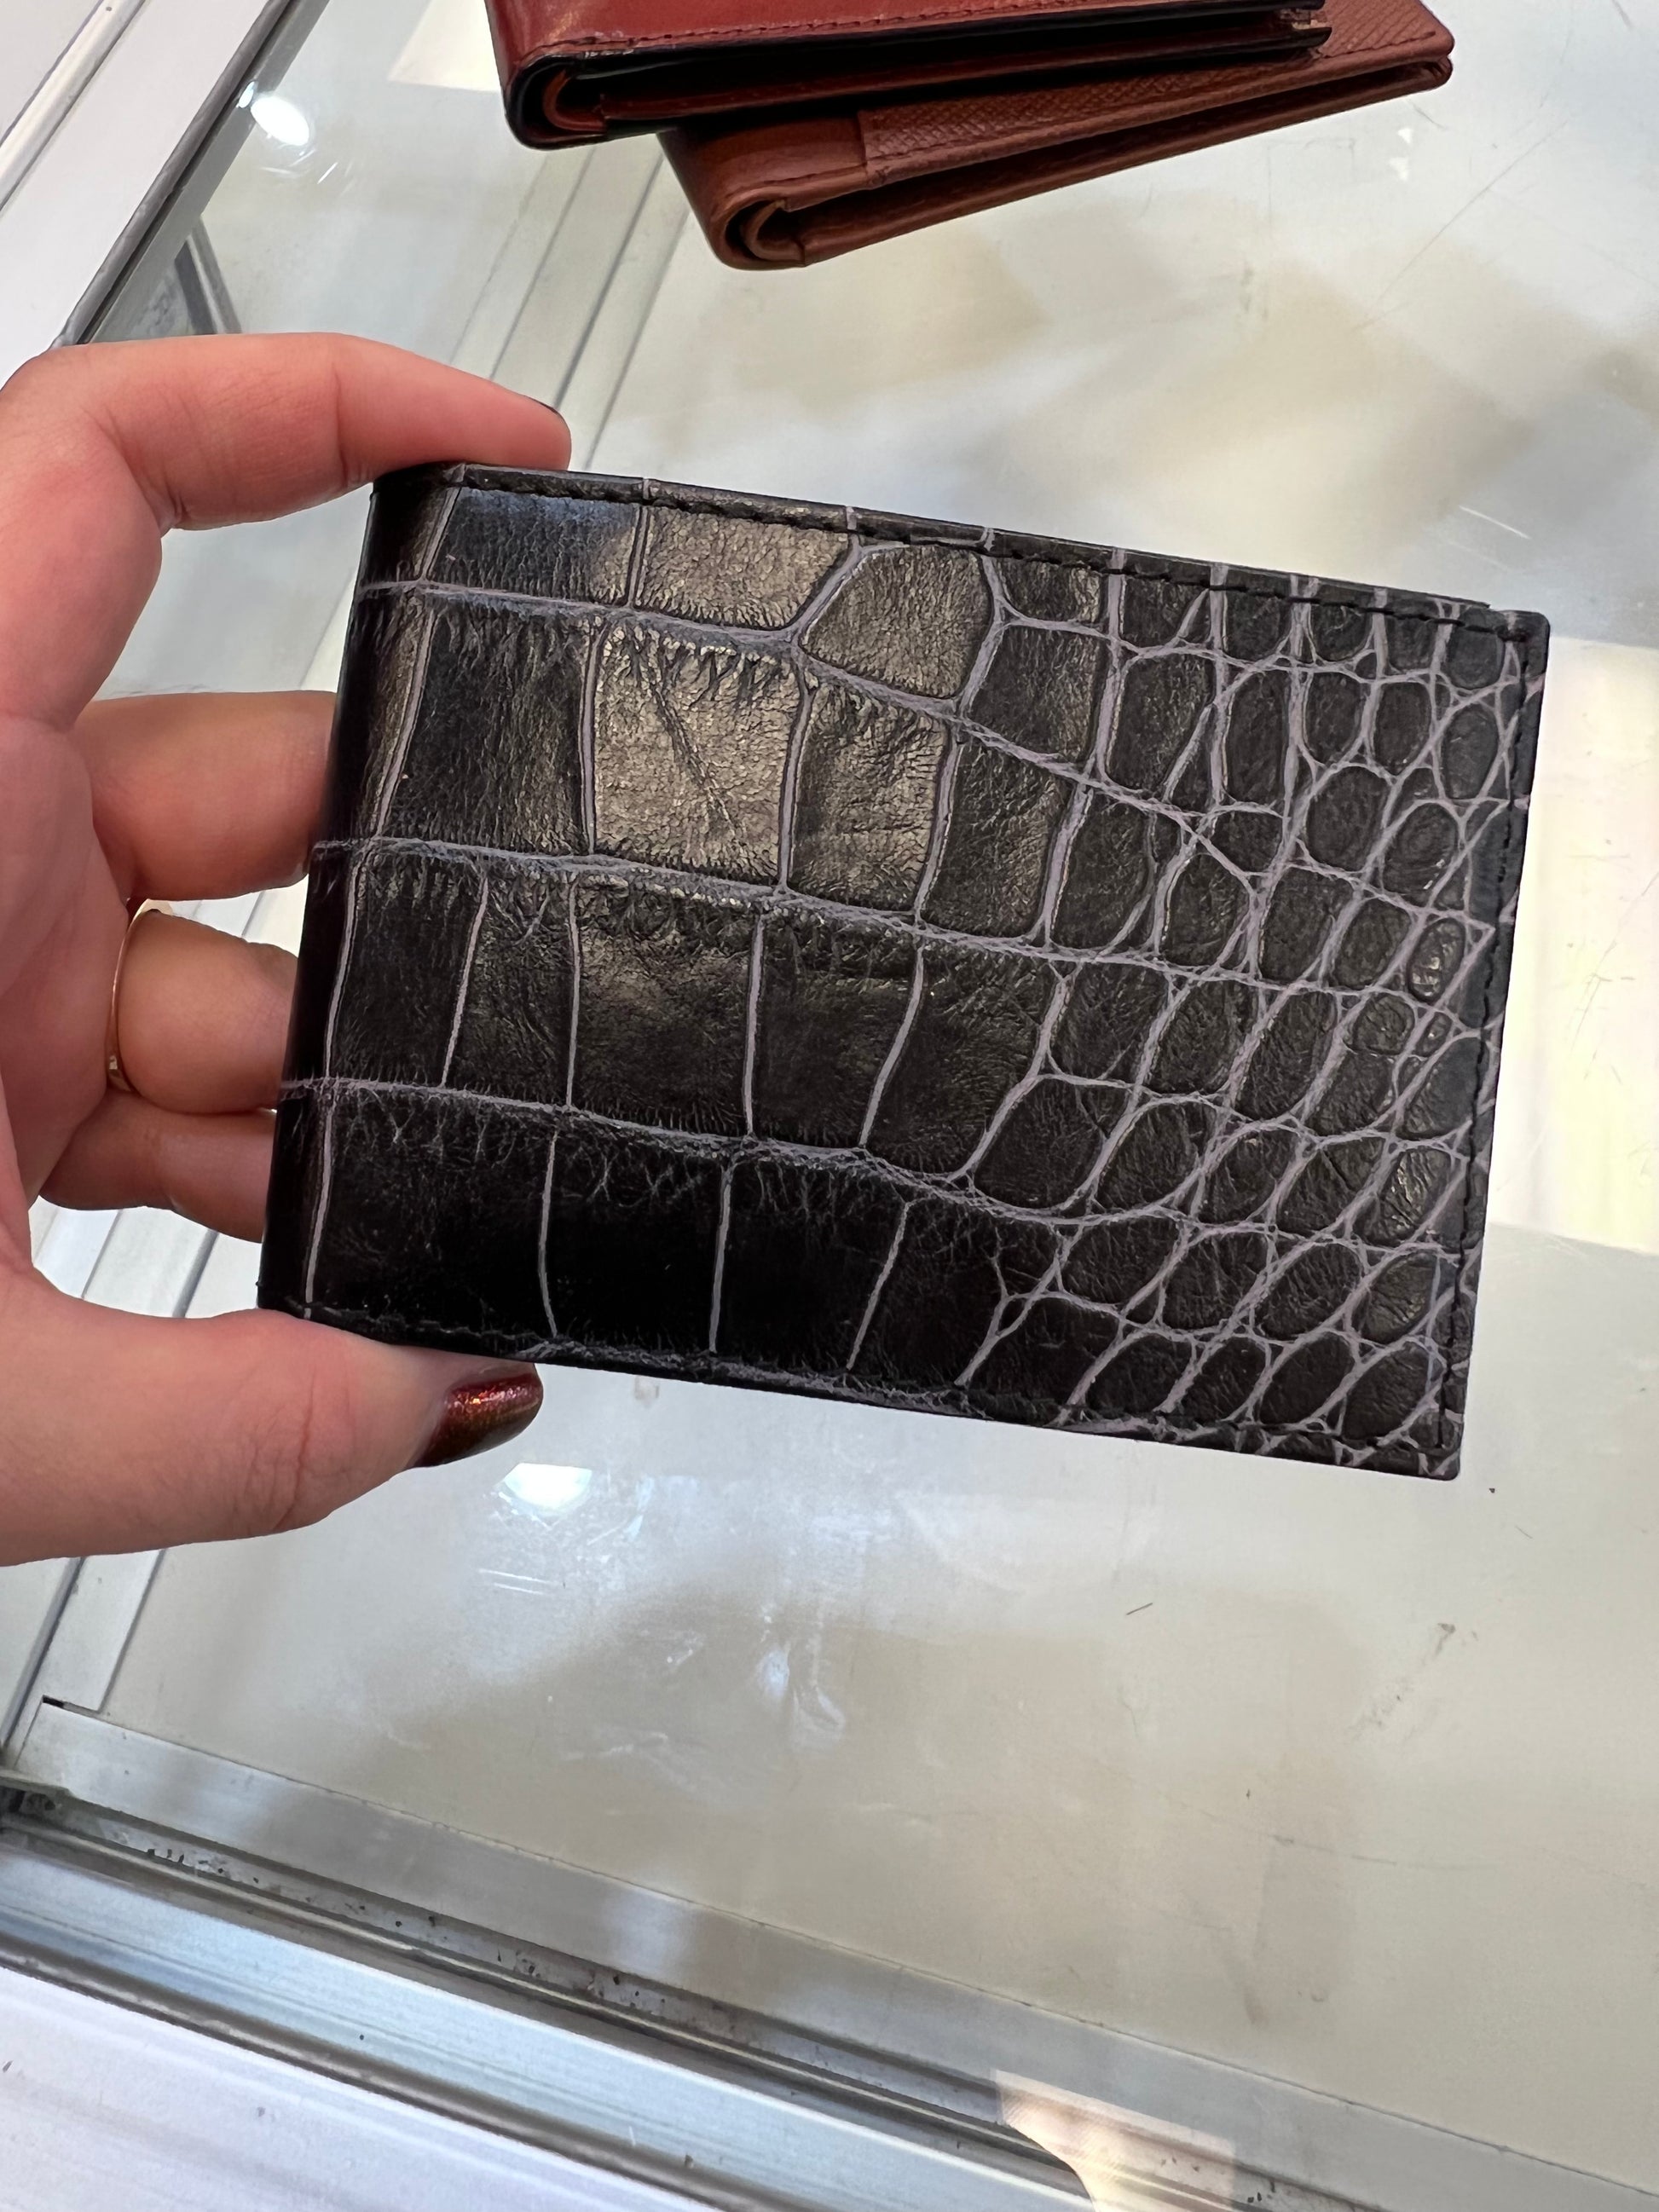 Men's Cubic Crocodile Leather Wallet in Brown/Black - Arcane Fox Shades of Blue/Black-#424156